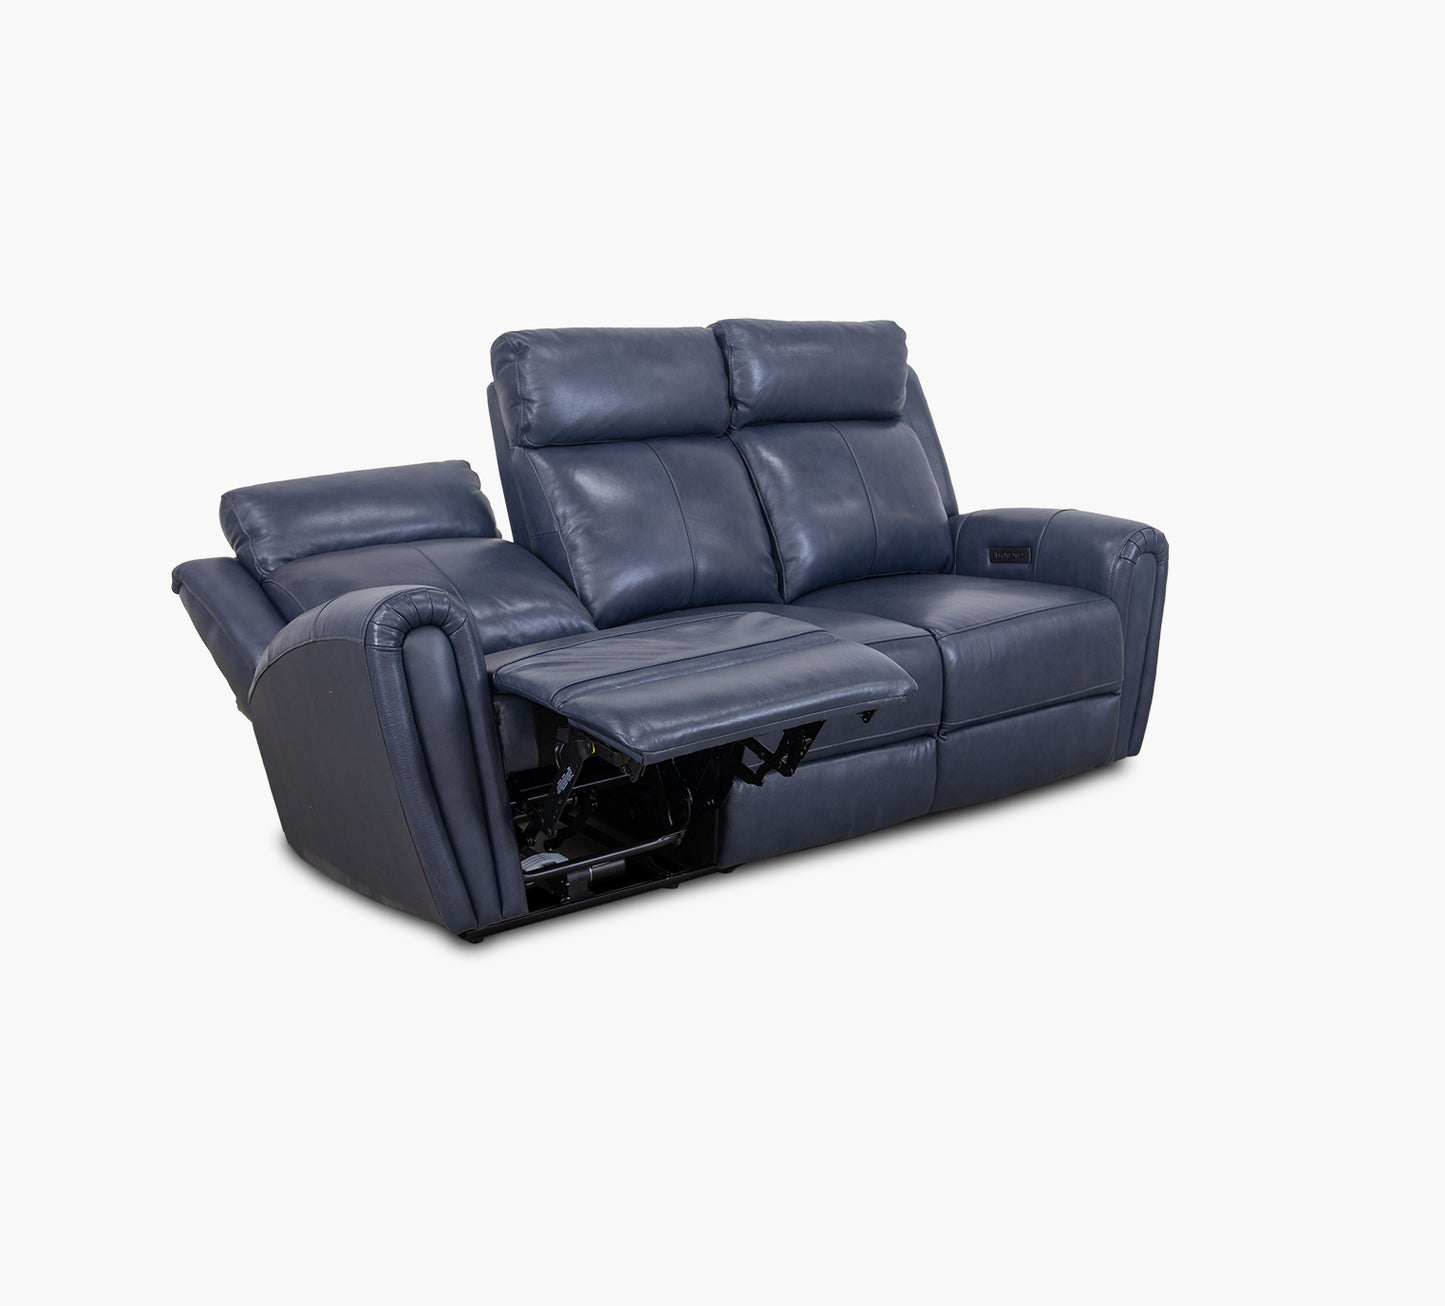 Jonathan Blue Leather Reclining Sofa